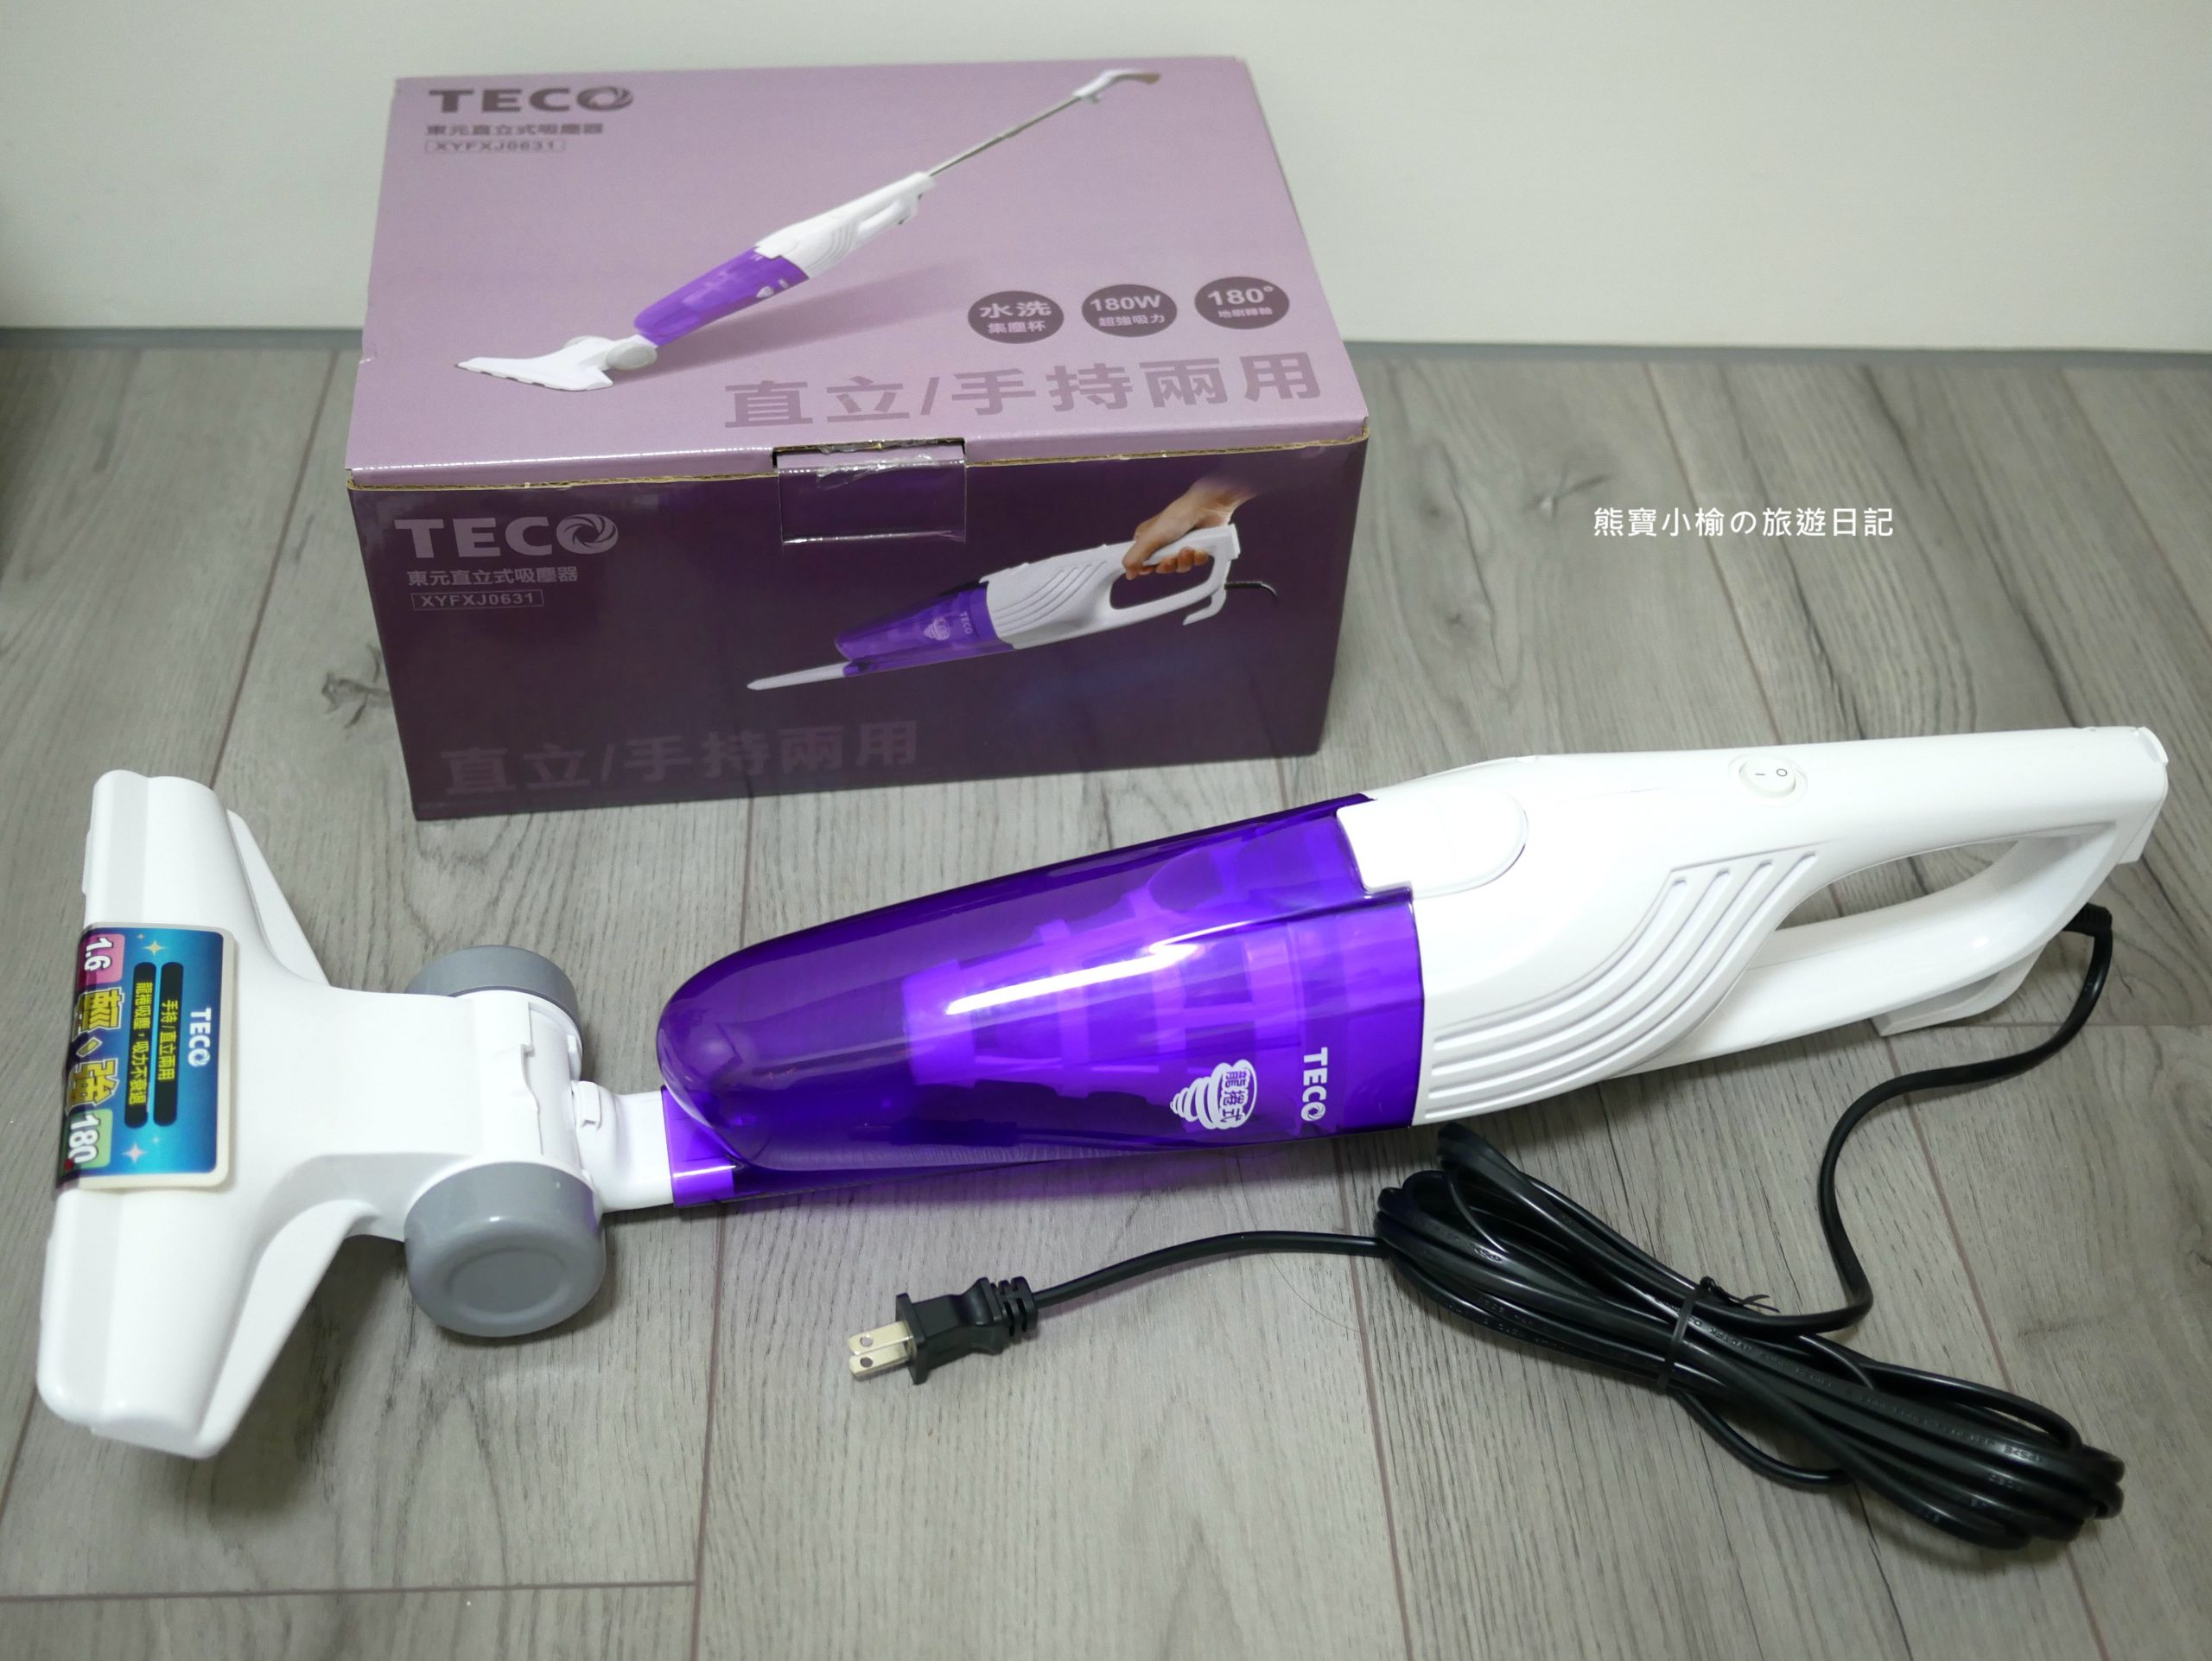 【3C家電分享】TECO 東元直立式吸塵器XYFXJ0631，使用心得及評價！小坪數房間推薦使用吸塵器。 @熊寶小榆の旅遊日記